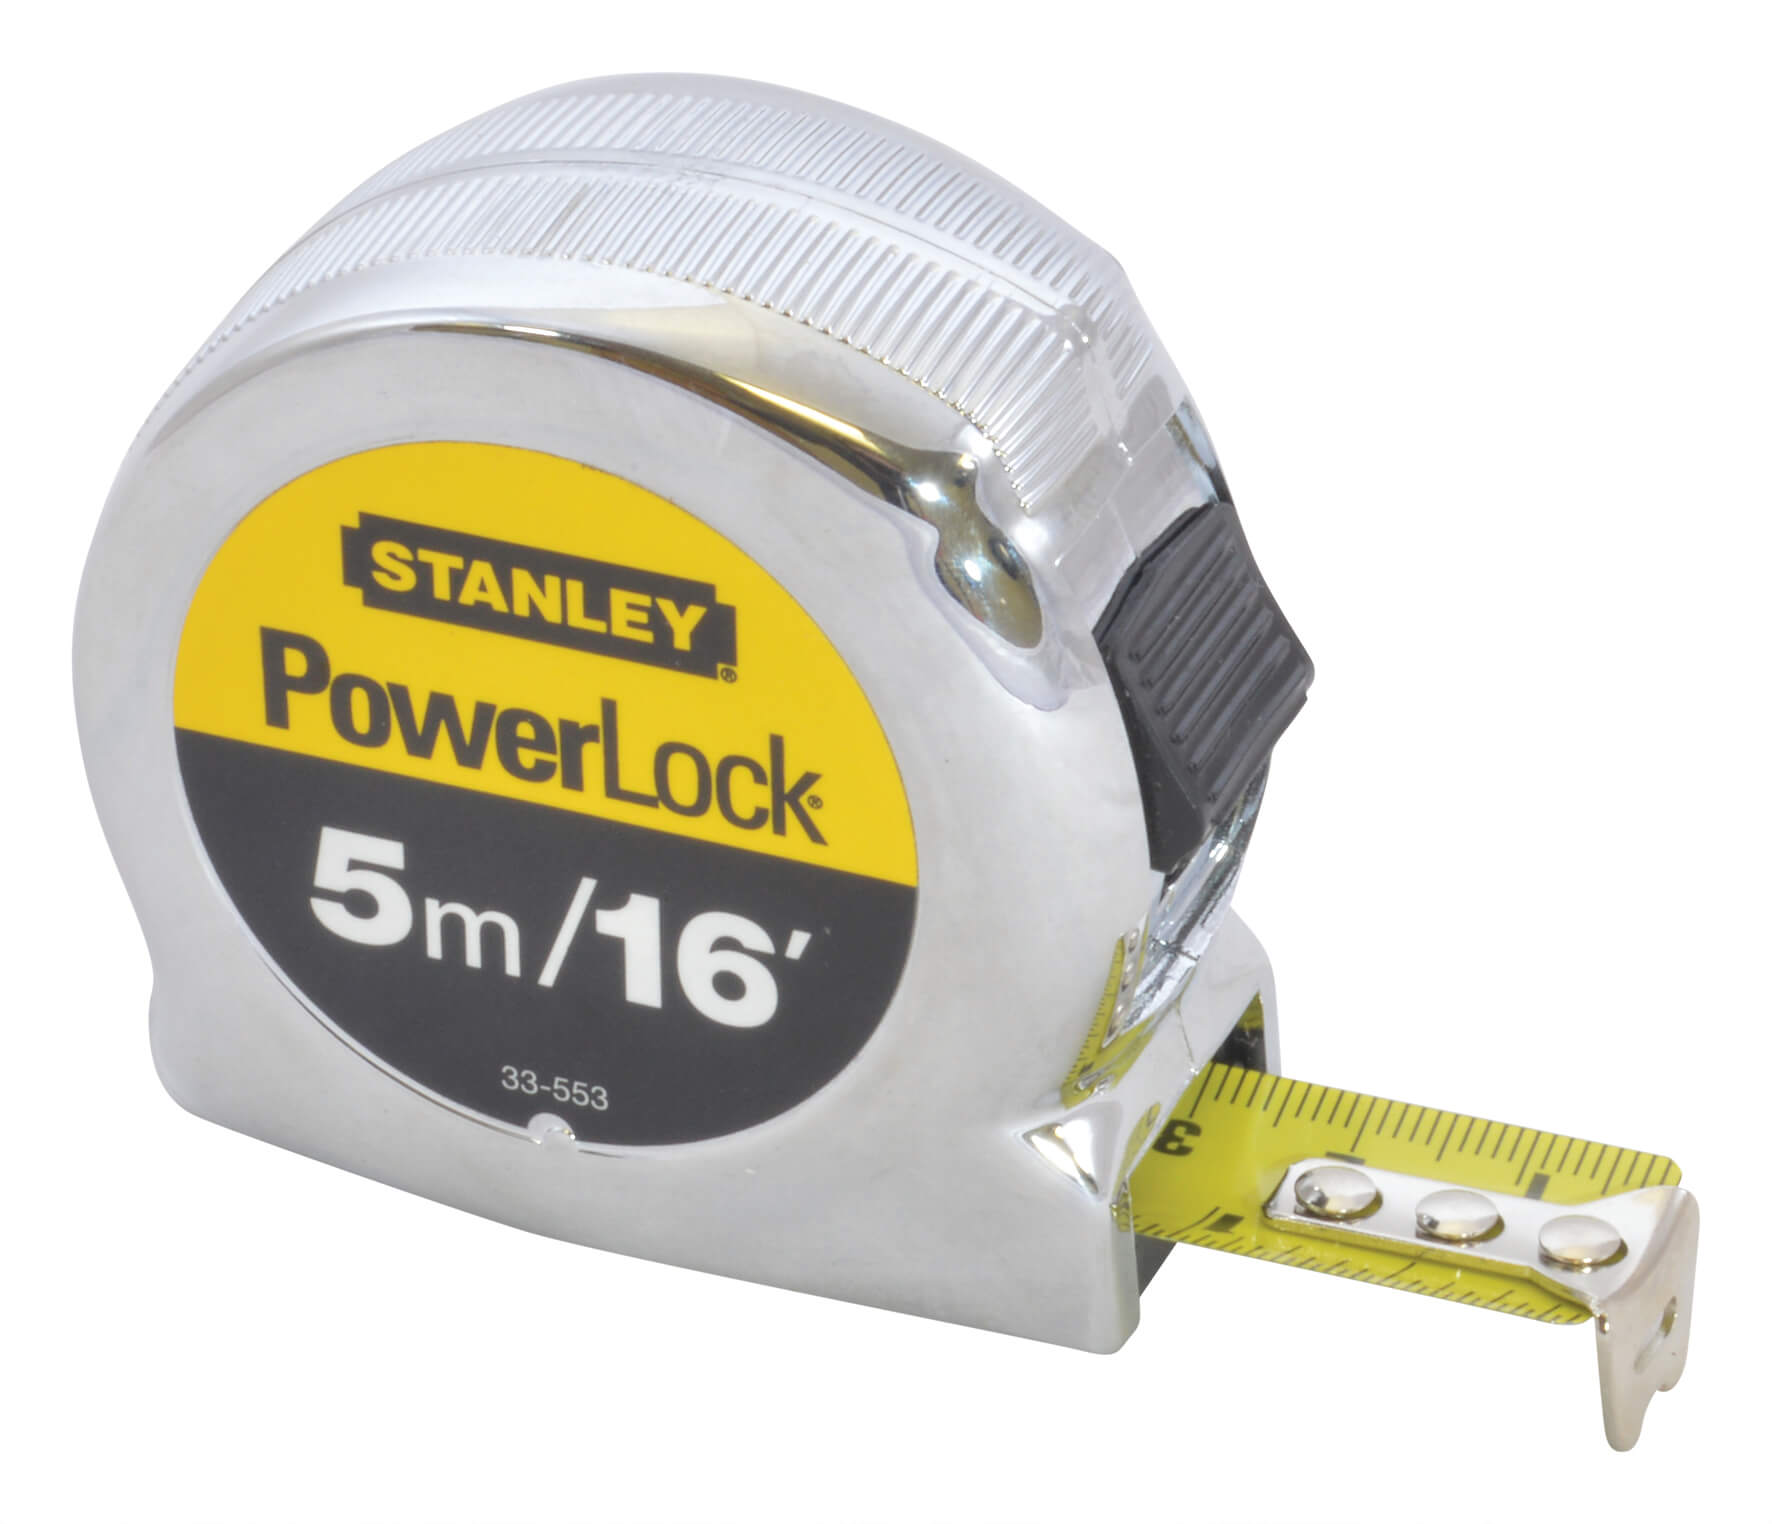 Stanley Powerlock Tape - 3m/10ft